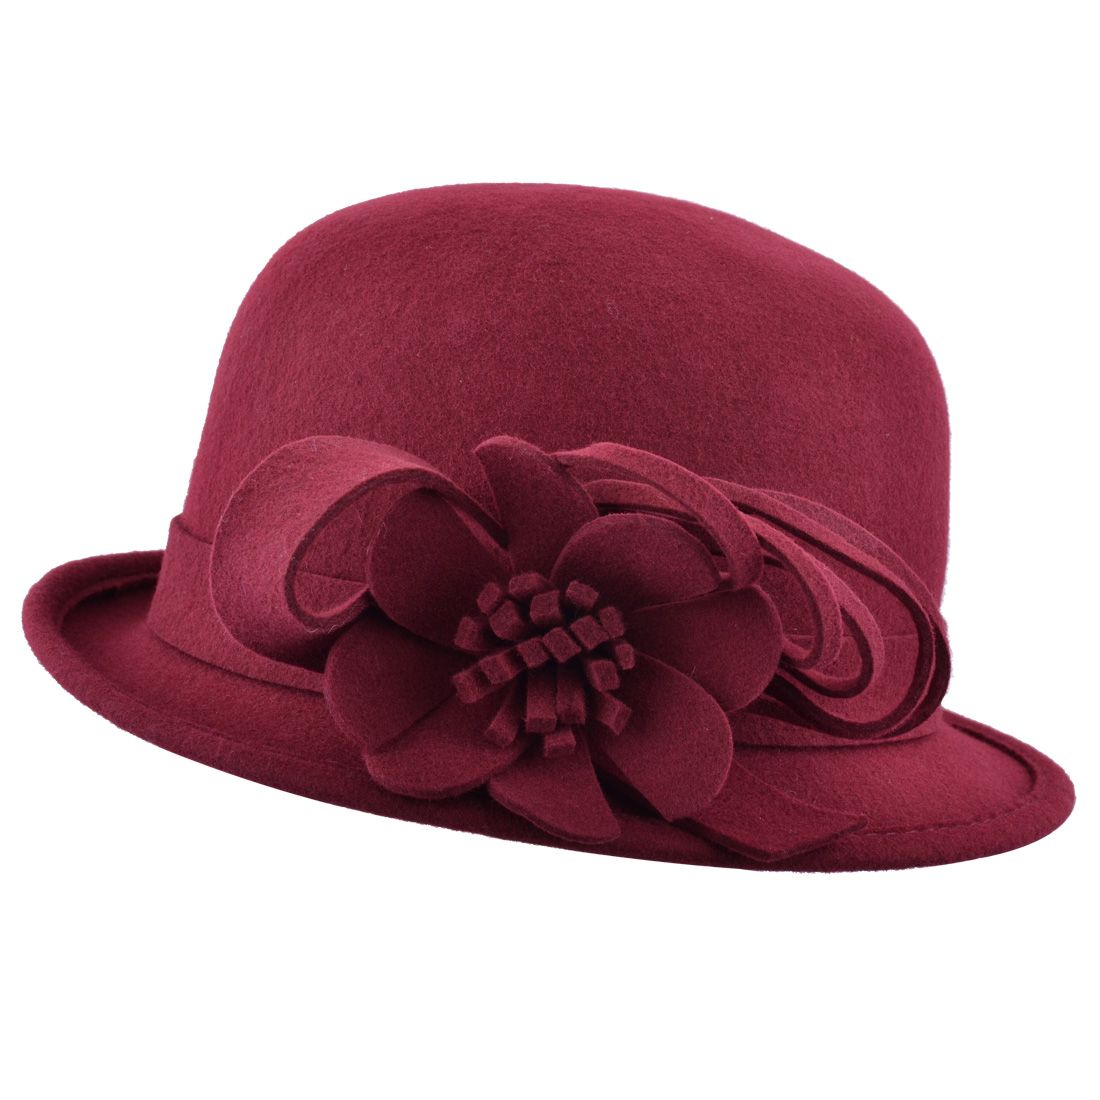 Wool Felt Cloche Hat With Flower